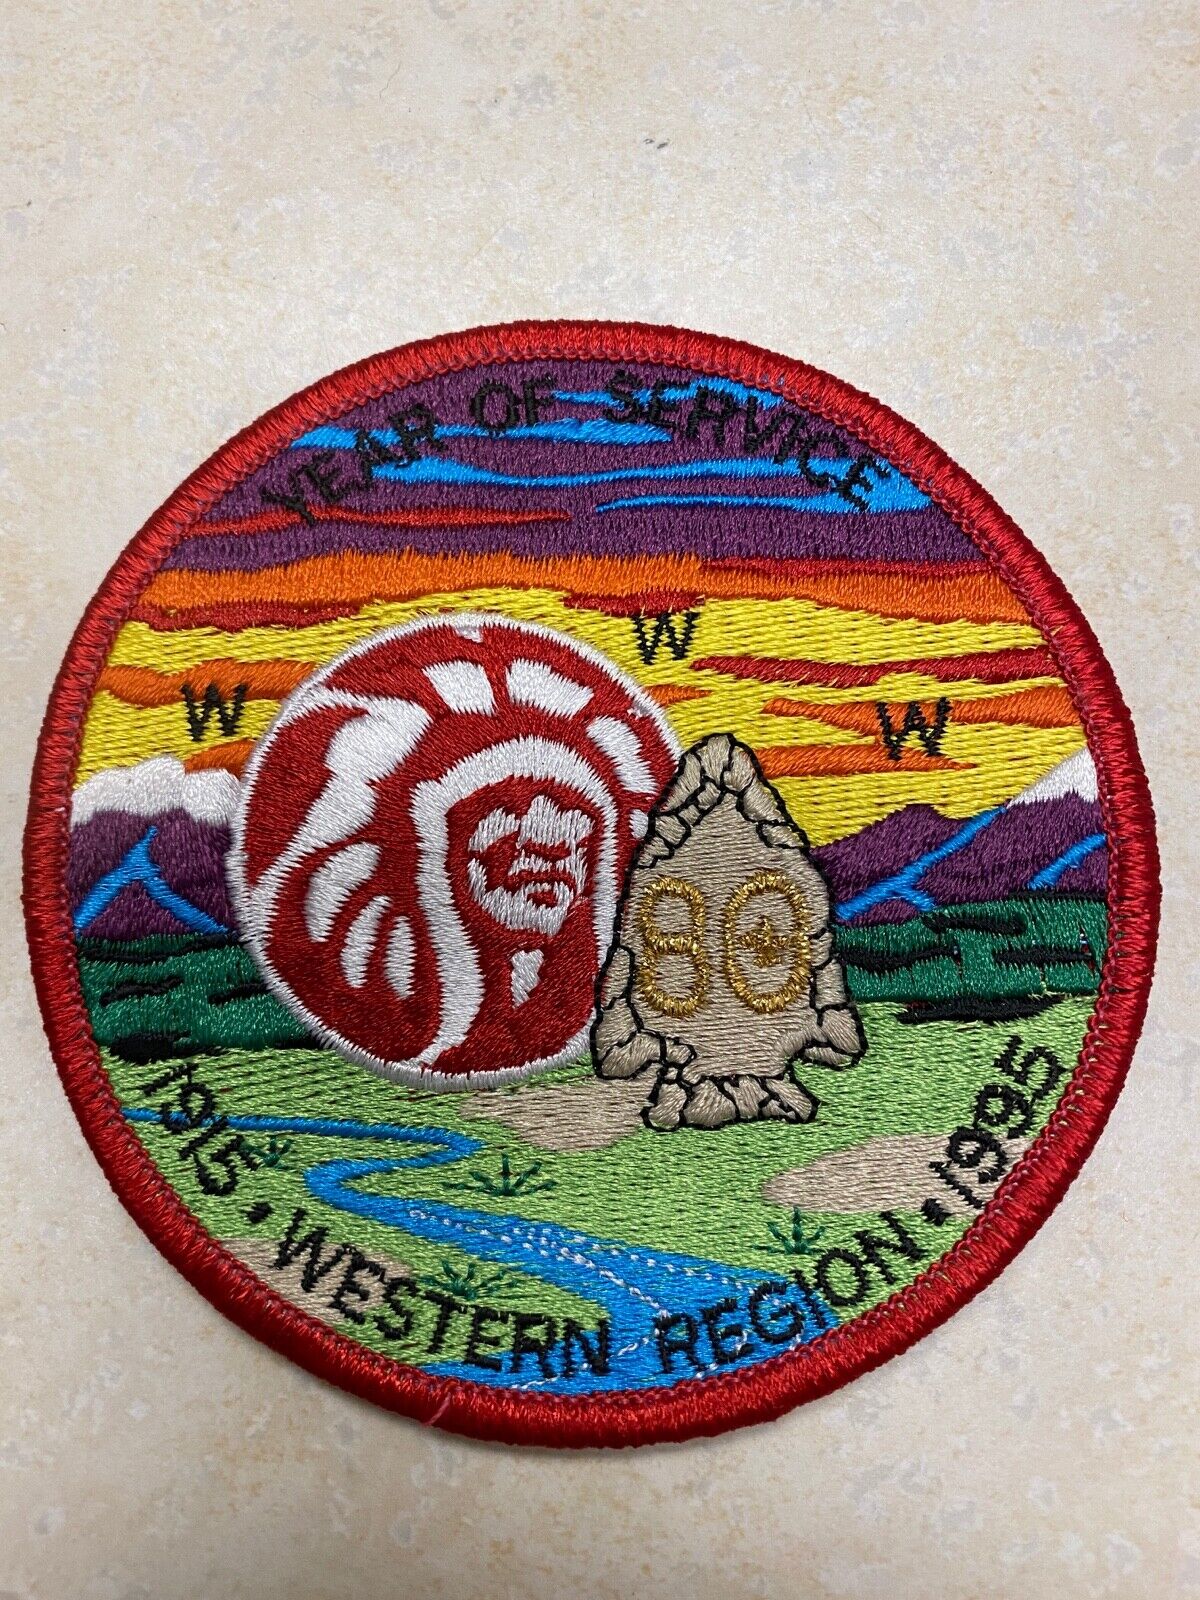 1995 Western Region 80th Anniversary Patch